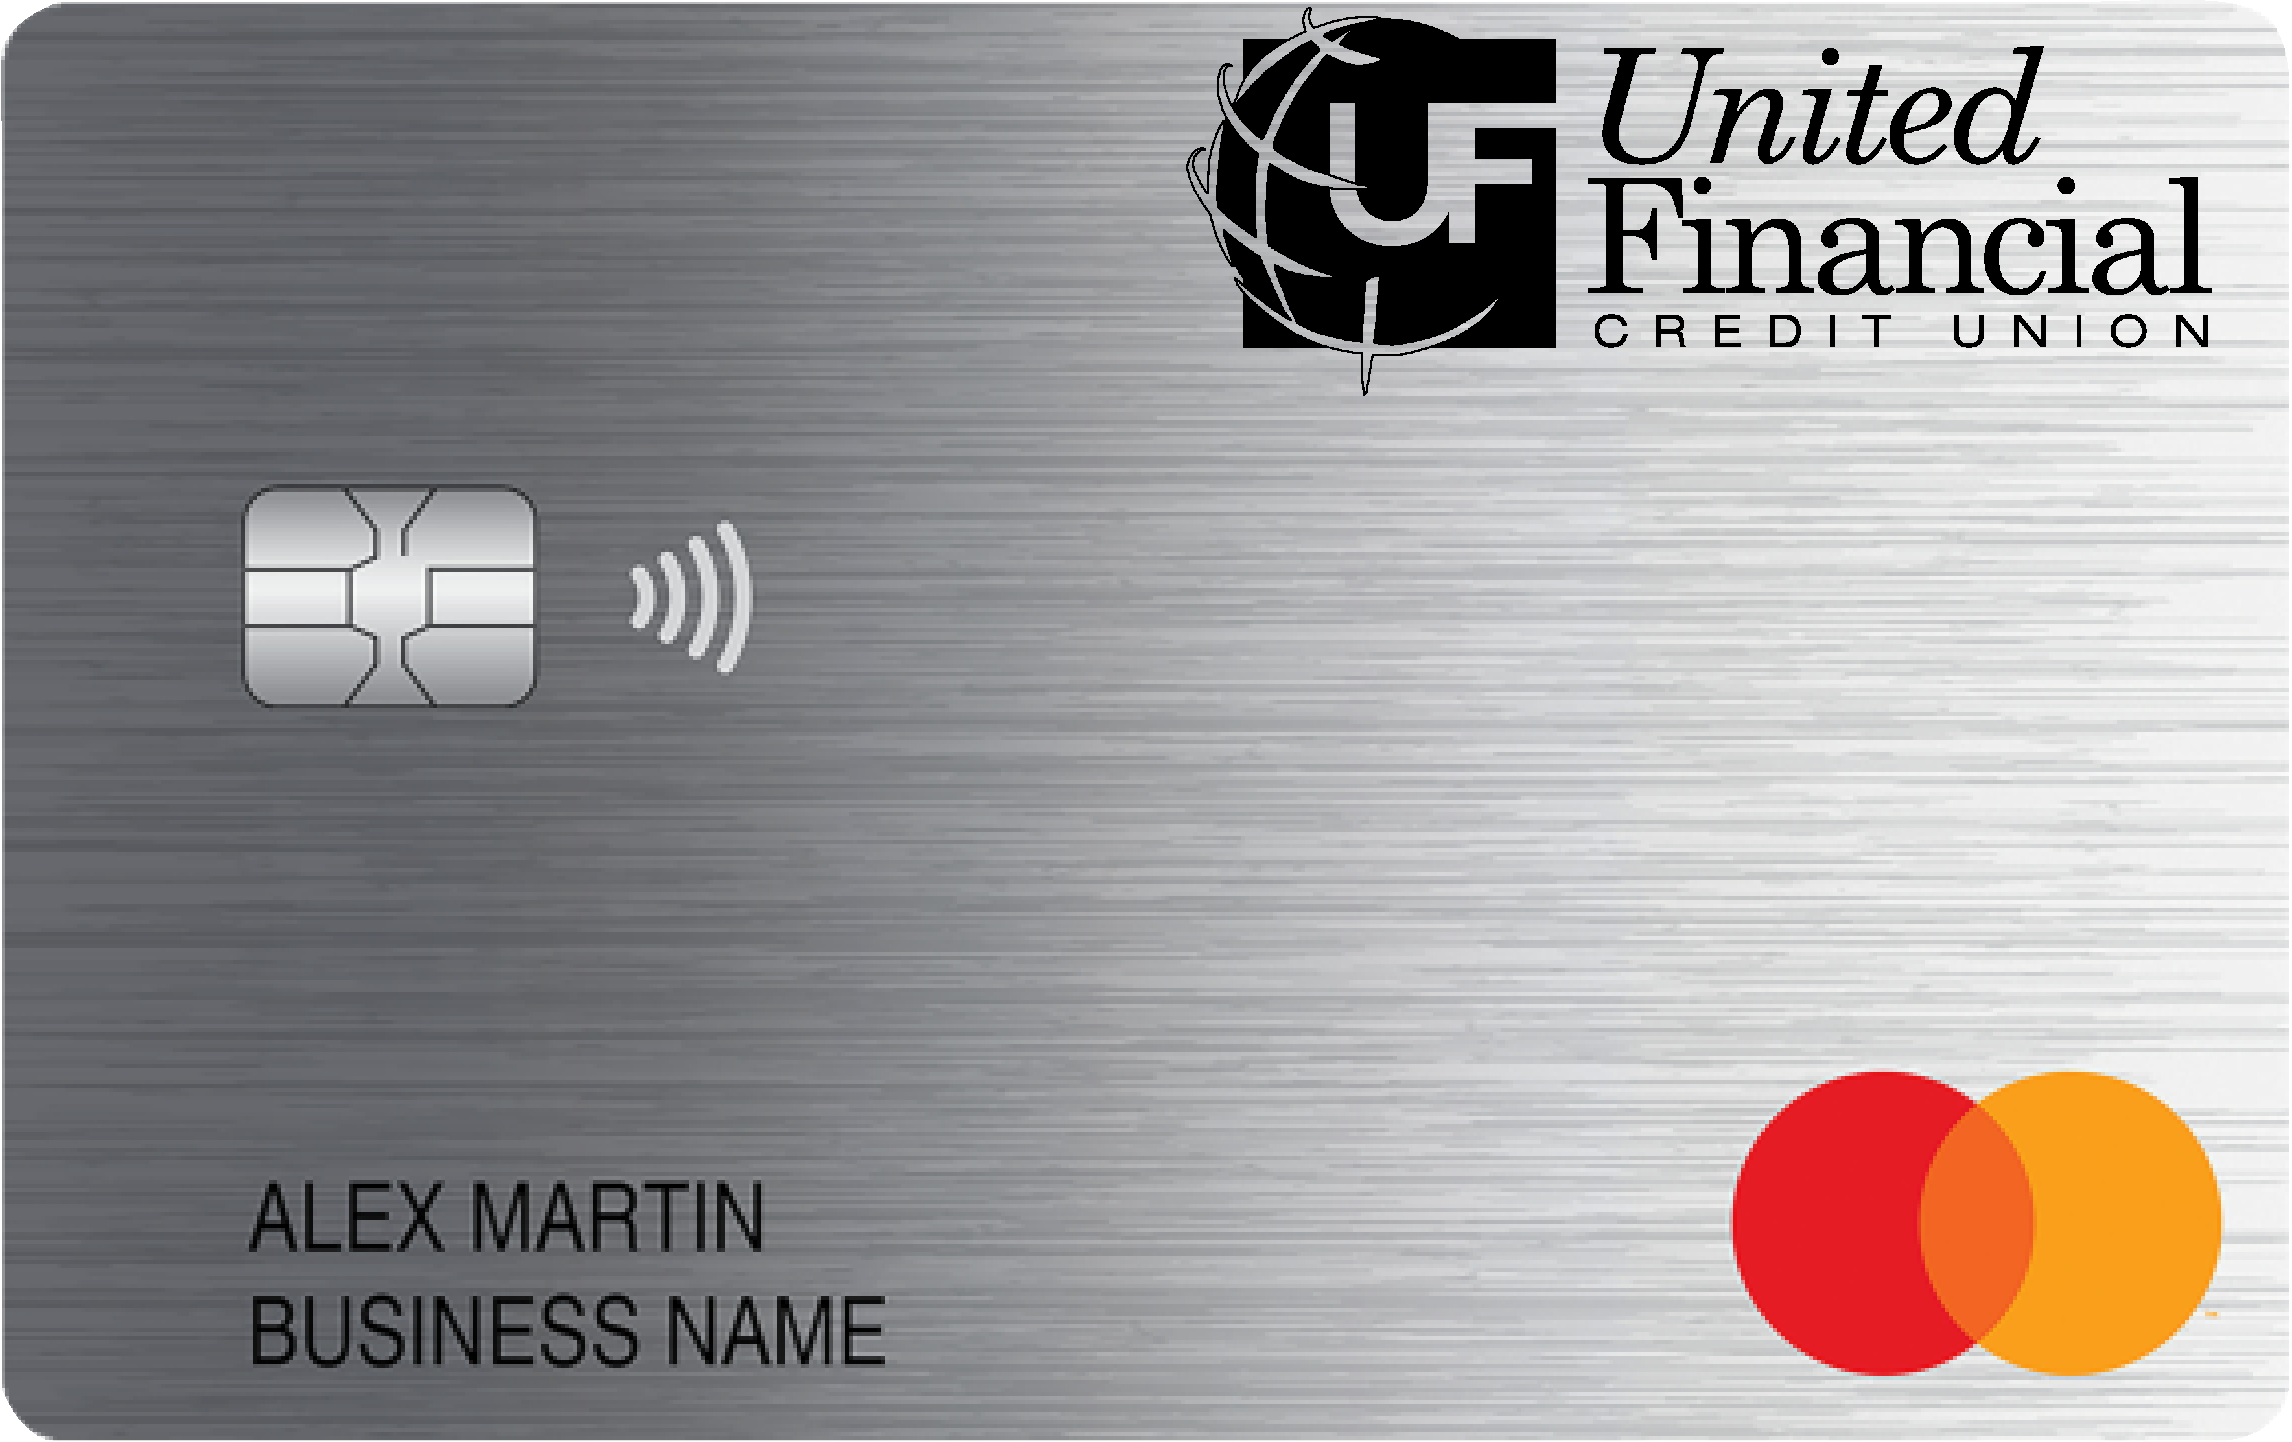 United Financial Credit Union Smart Business Rewards Card